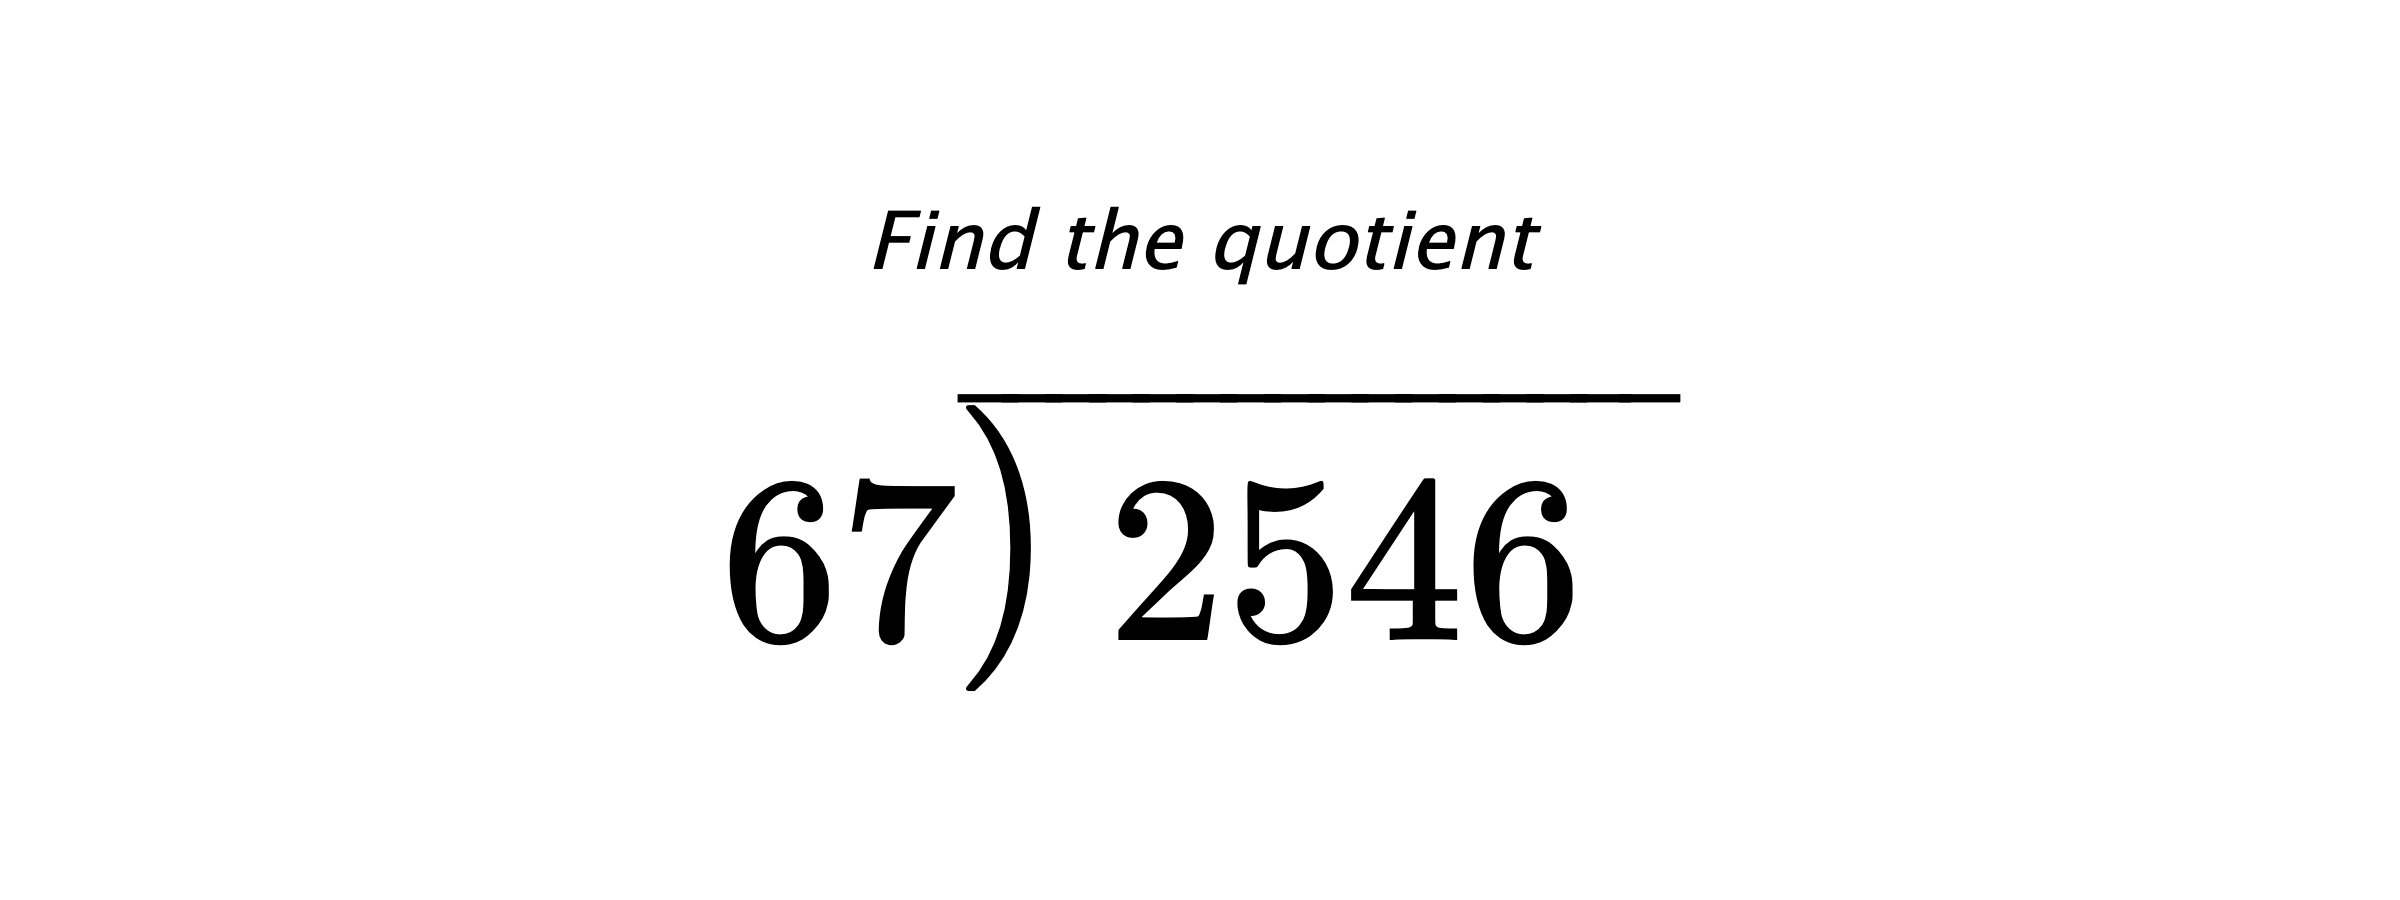 Find the quotient $ 67{\overline{\smash{\raise.3ex\hbox{$\big)$}}\,2546\phantom{)}}} $